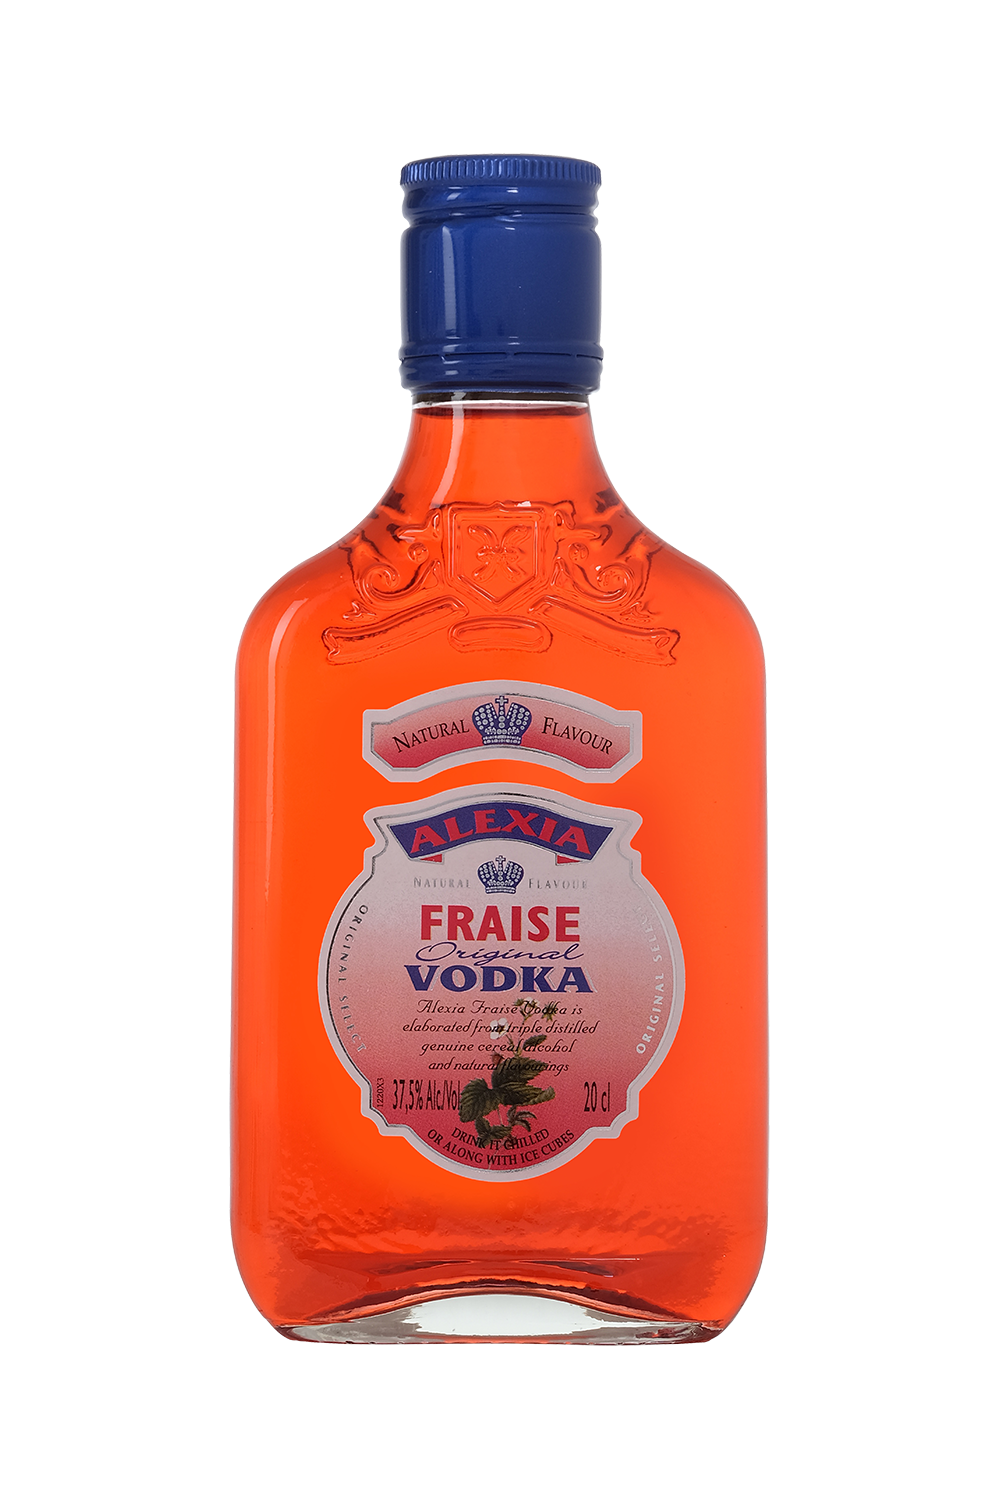 Vodka Fraise Alexia 020 37.5 0V9J Web